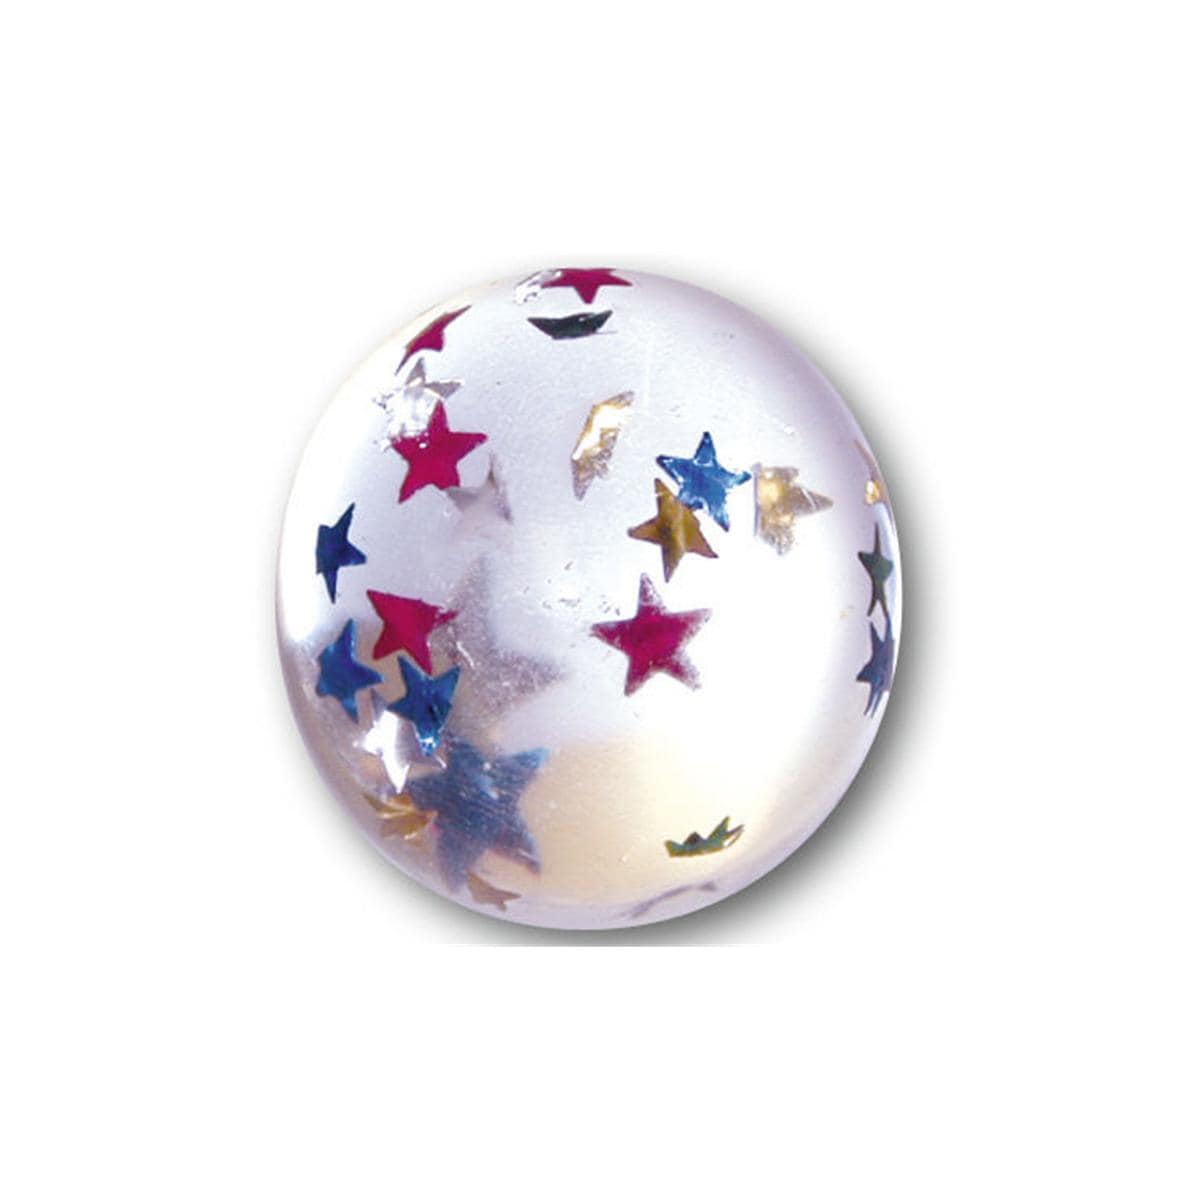 Stuiterballen - Glitter superball mix 32mm, 100 stuks